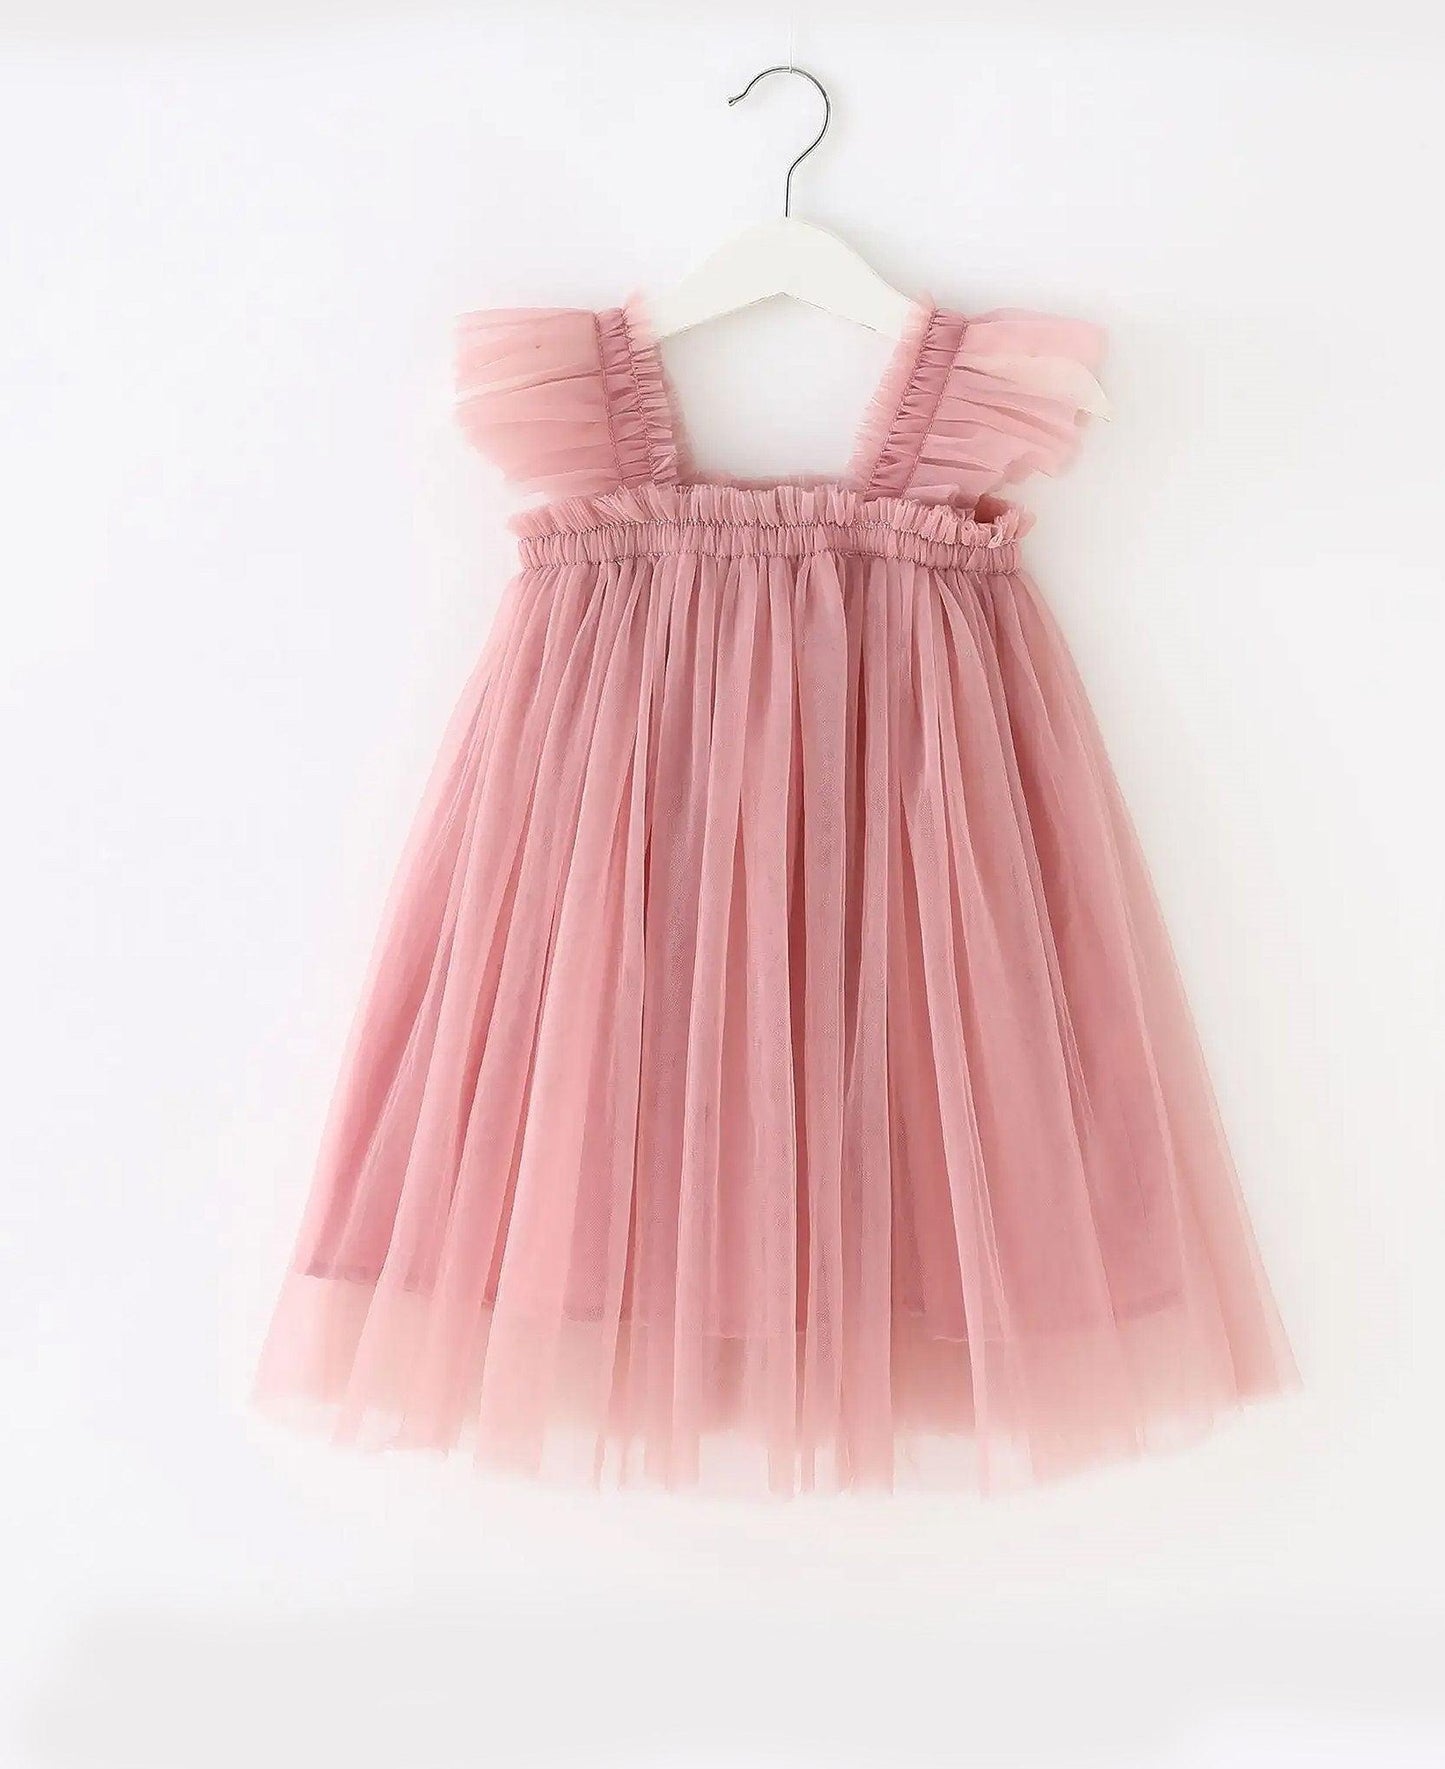 Rose pink tulle dress